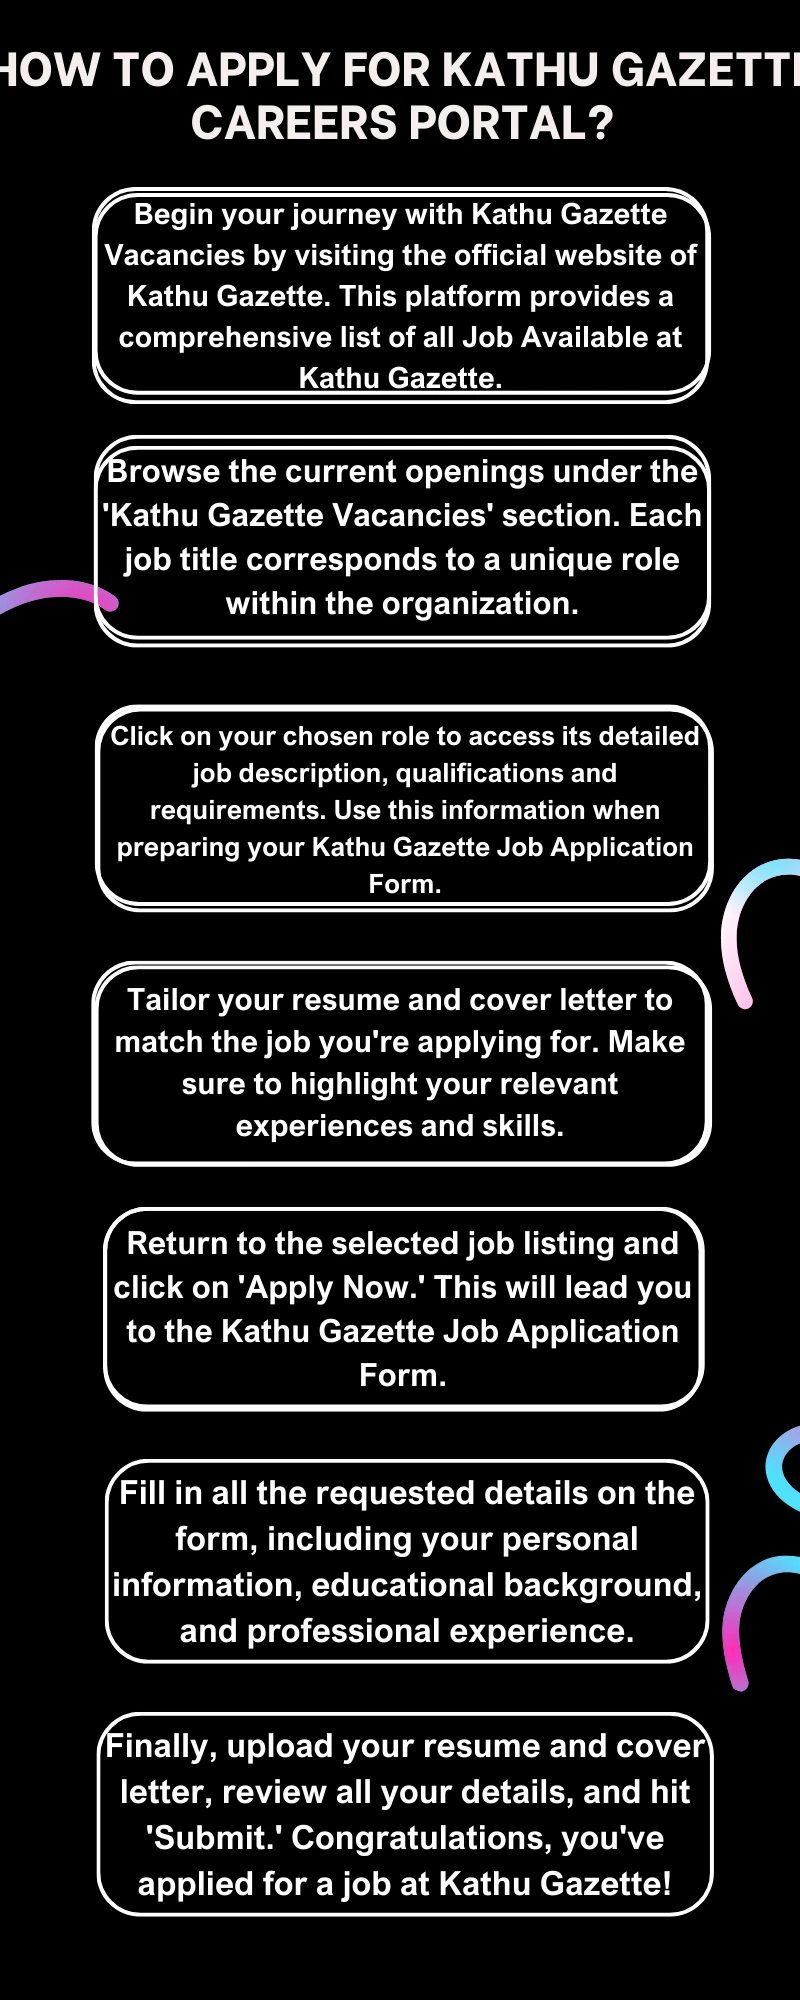 How To Apply for Kathu Gazette Careers Portal?